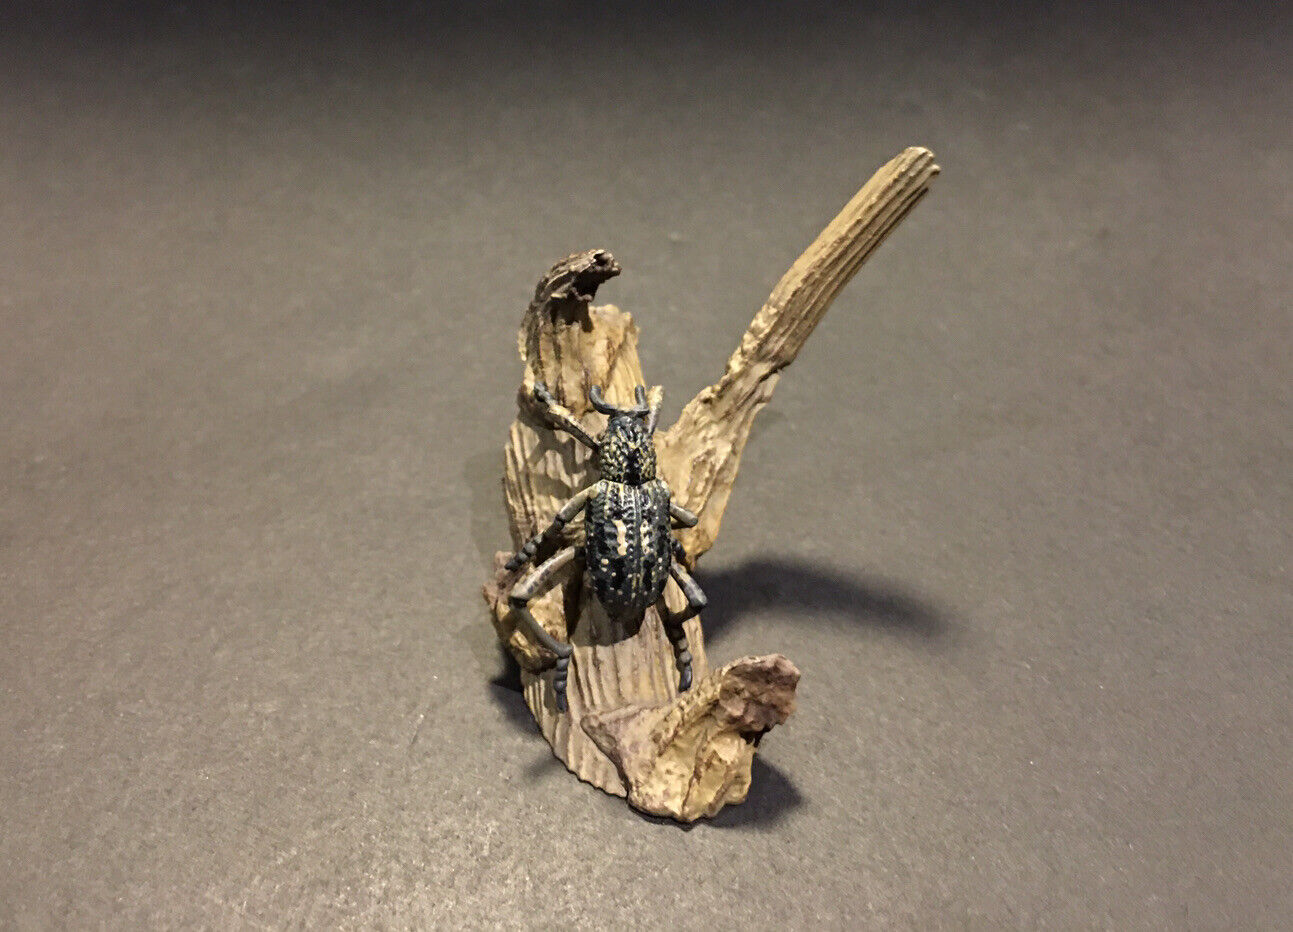 Rare Yujin Kaiyodo Large Weevil Beetle Insect PVC Figure Model